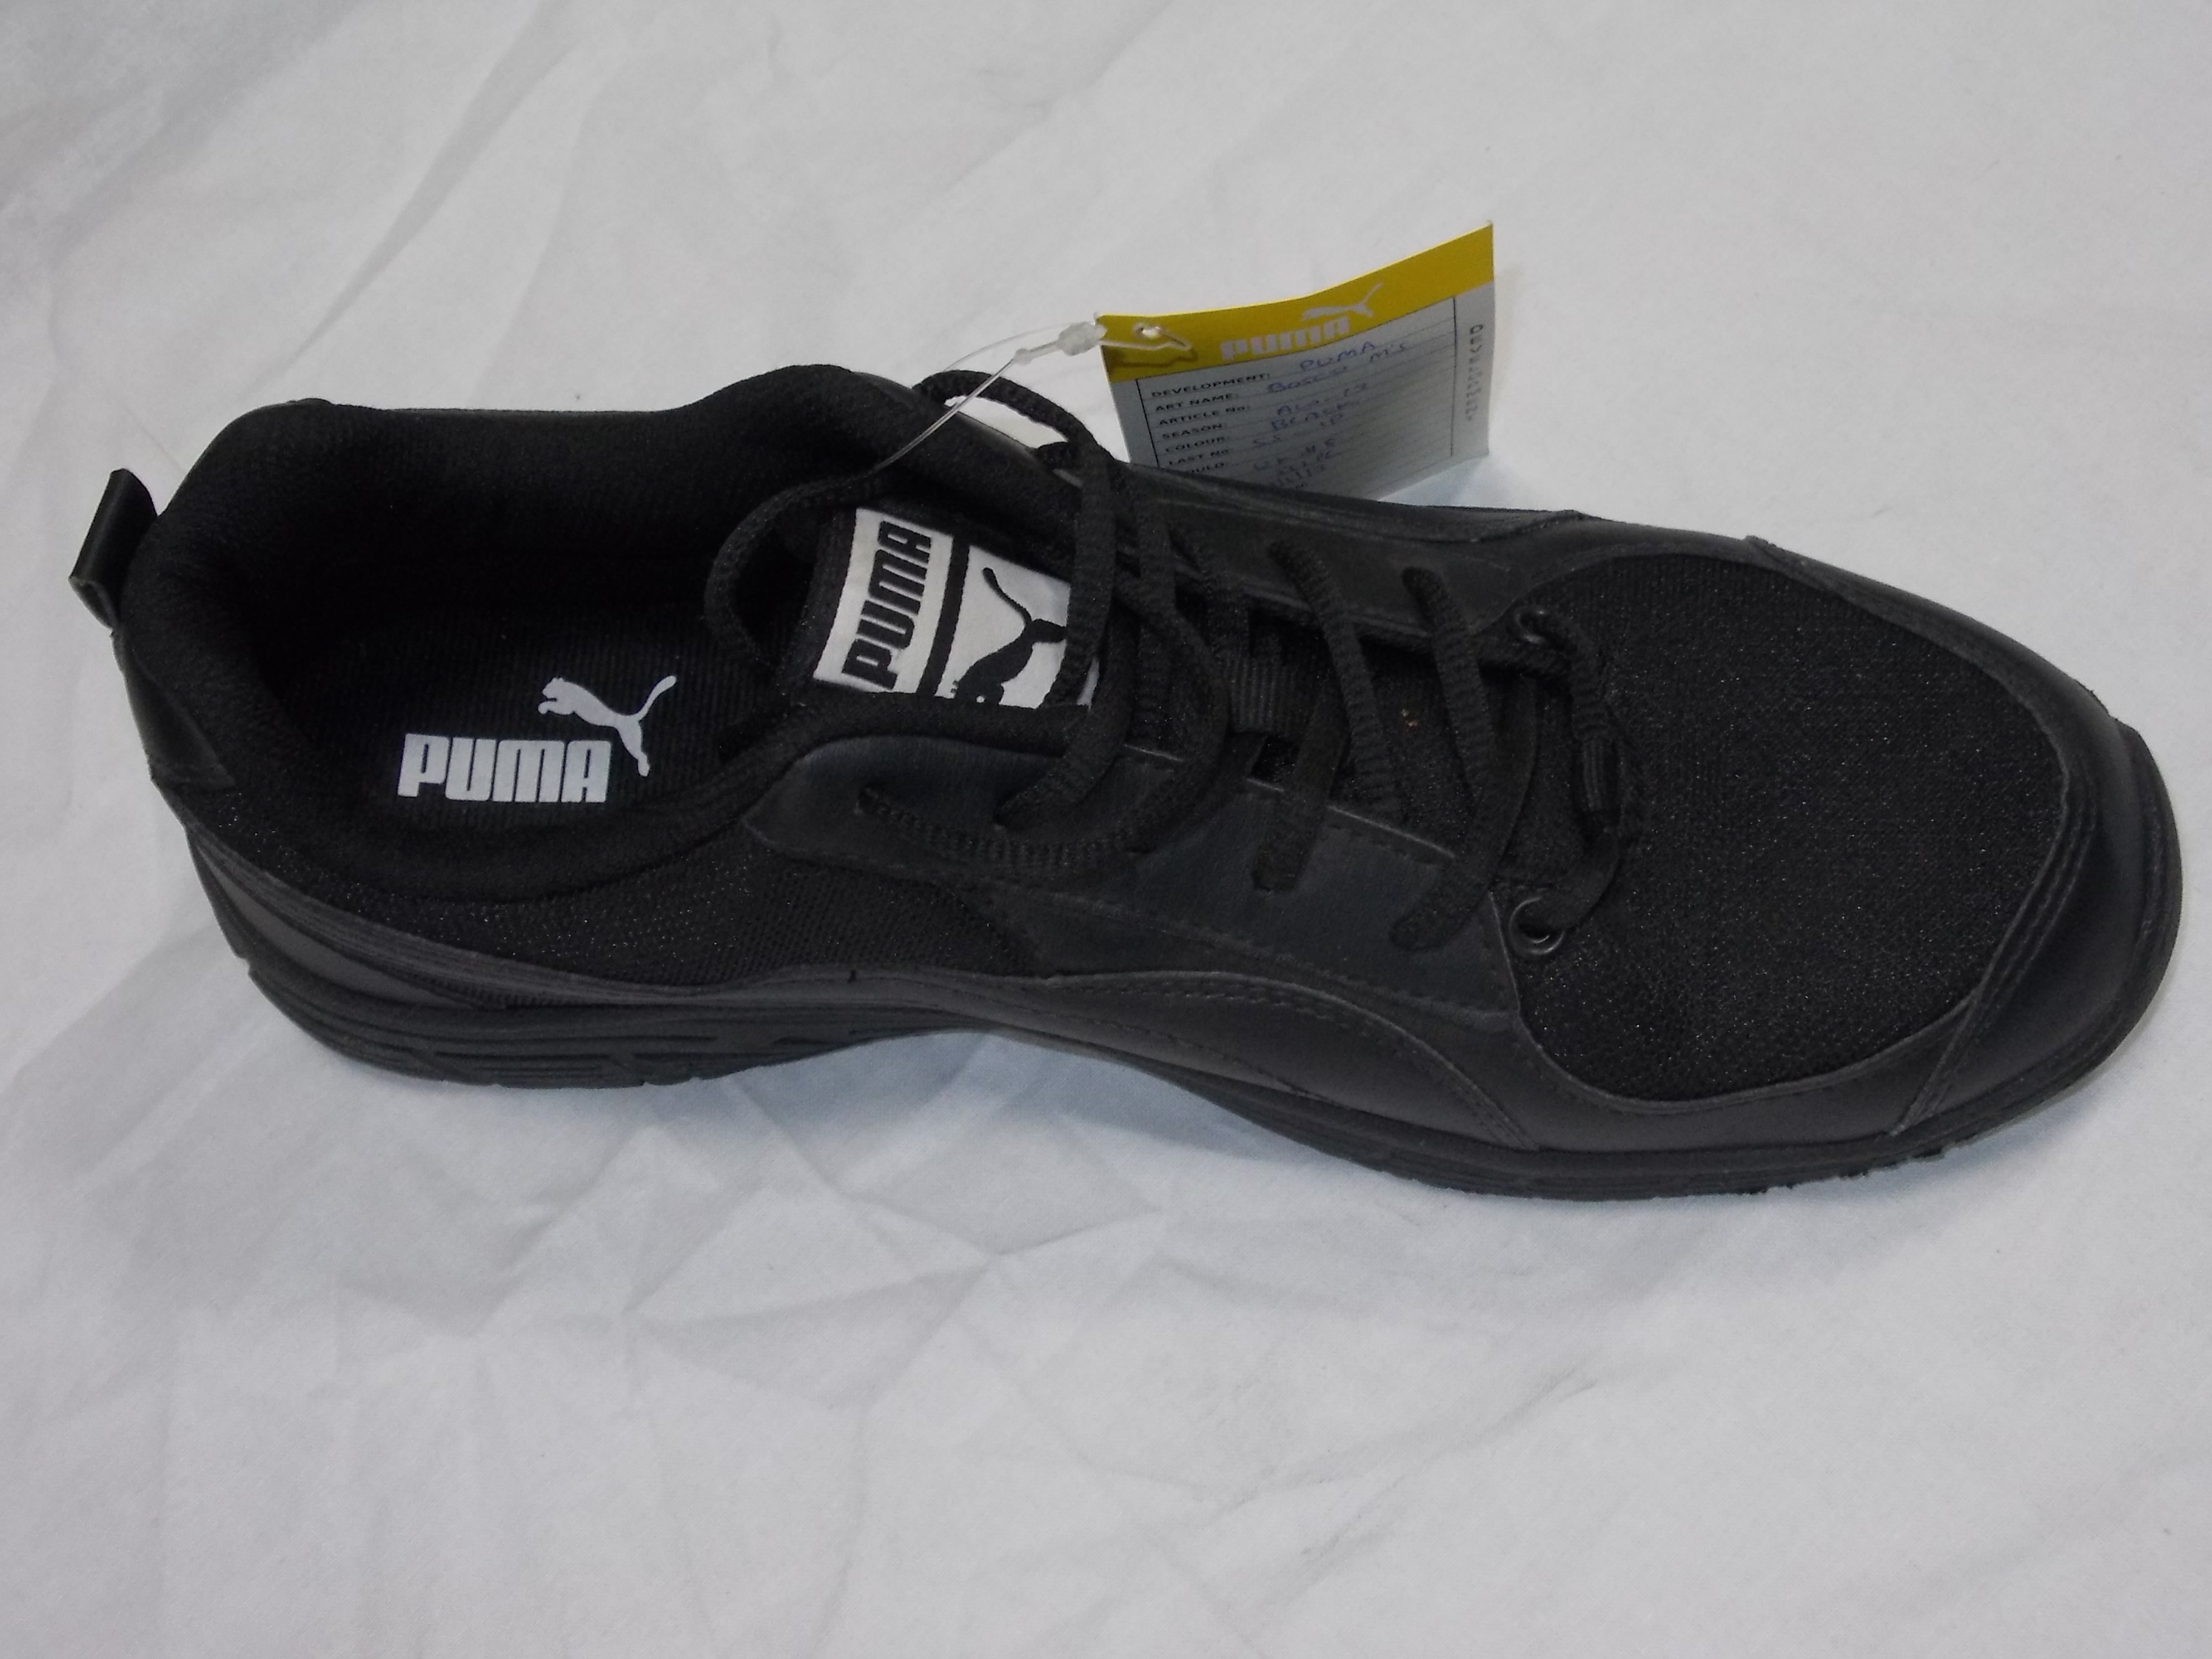 Puma Shoes Laces (Senior), Puma School shoes, Puma, Puma Shoes laces ...